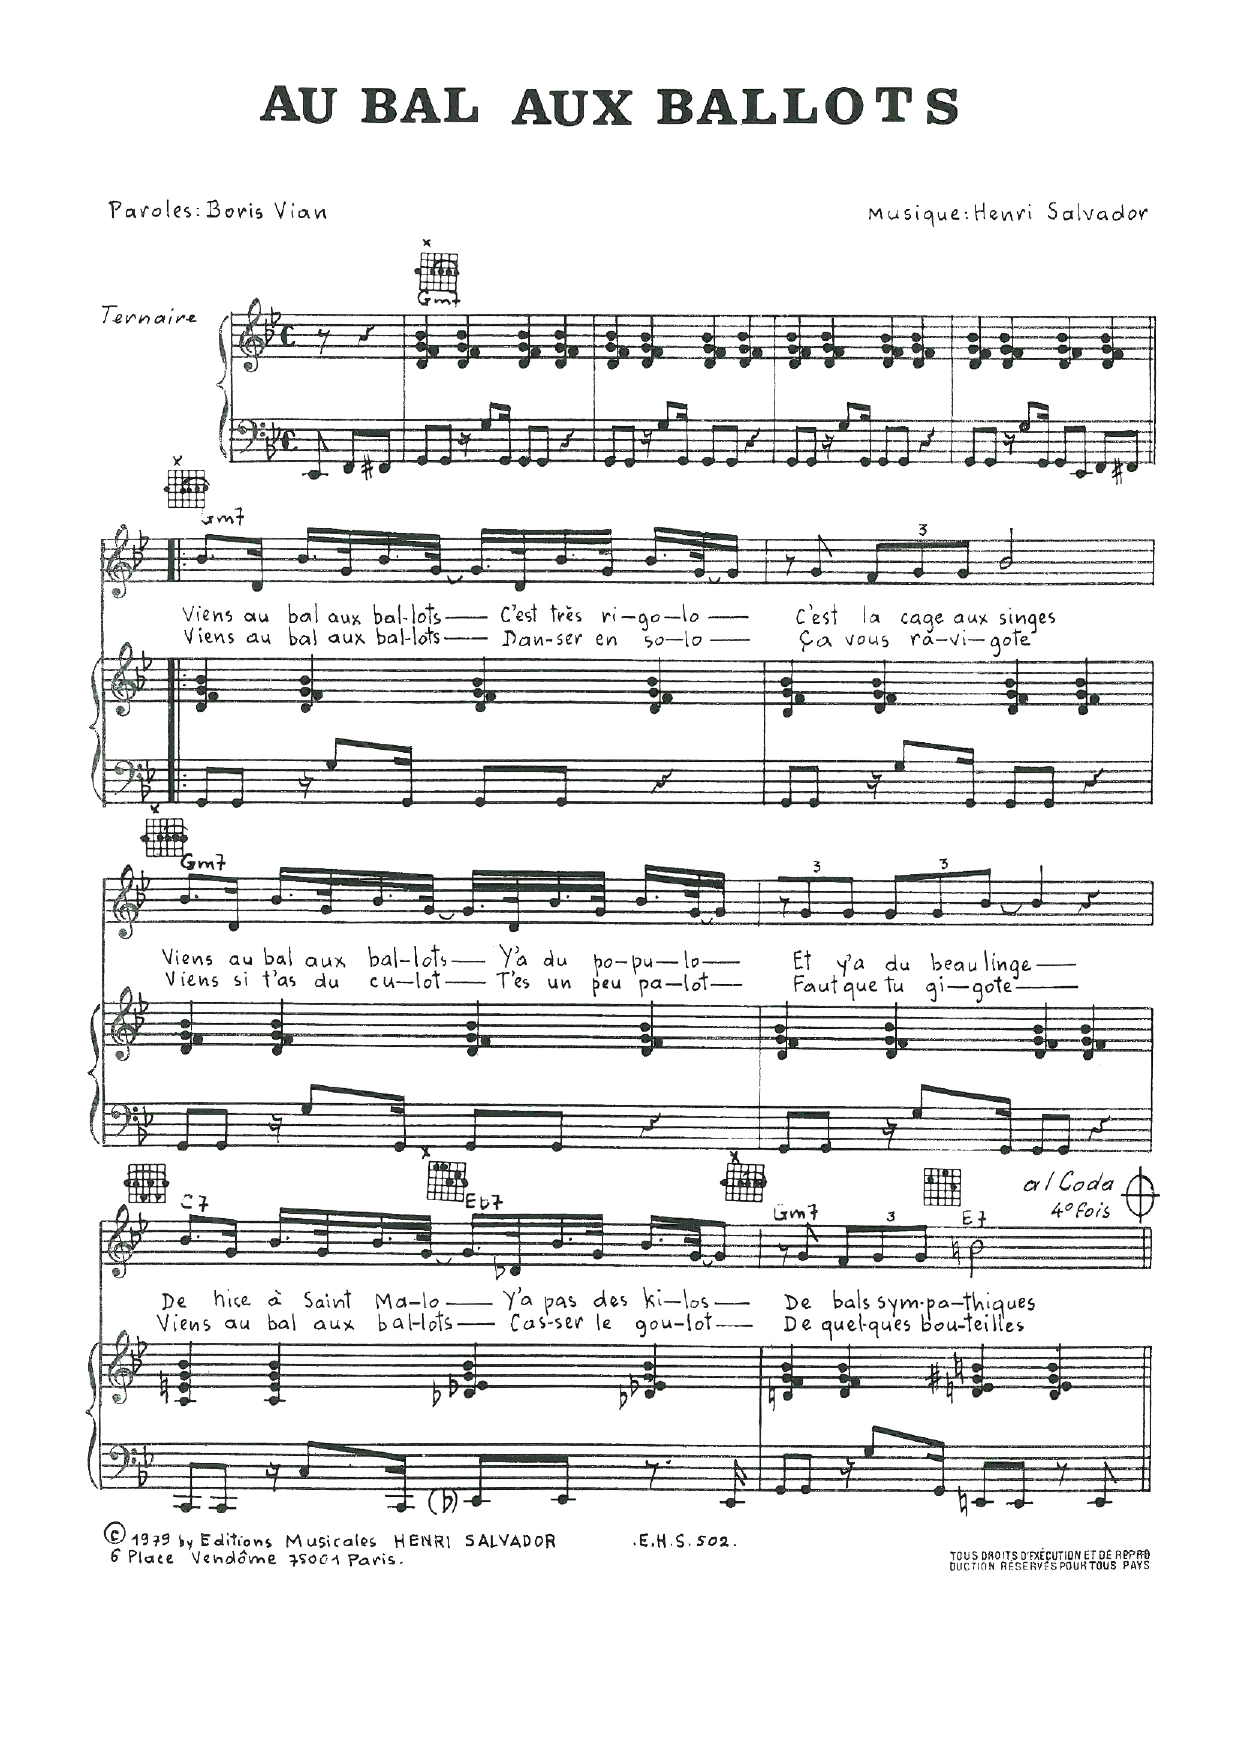 Henri Salvador Au Bal Aux Ballots Sheet Music Notes & Chords for Piano, Vocal & Guitar - Download or Print PDF